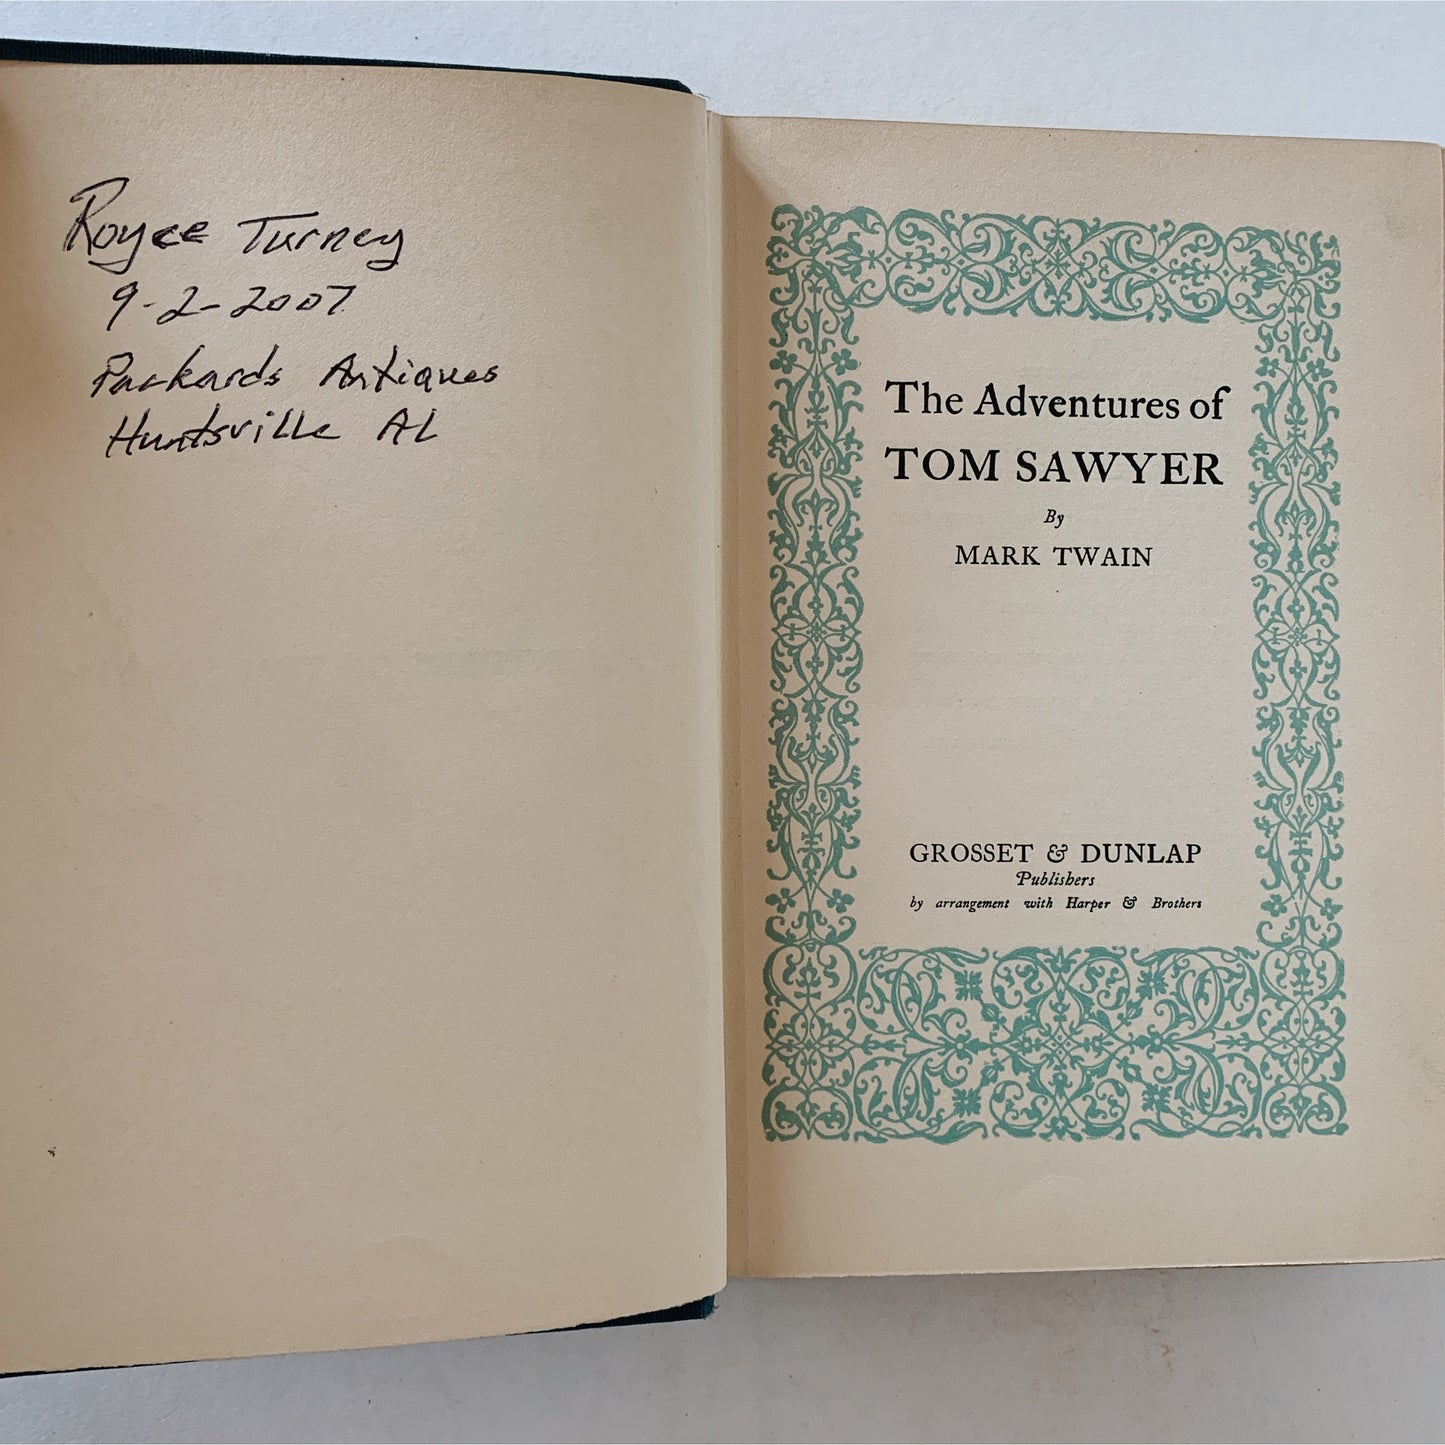 The Adventures of Tom Sawyer, Mark Twain, 1920 Hardcover